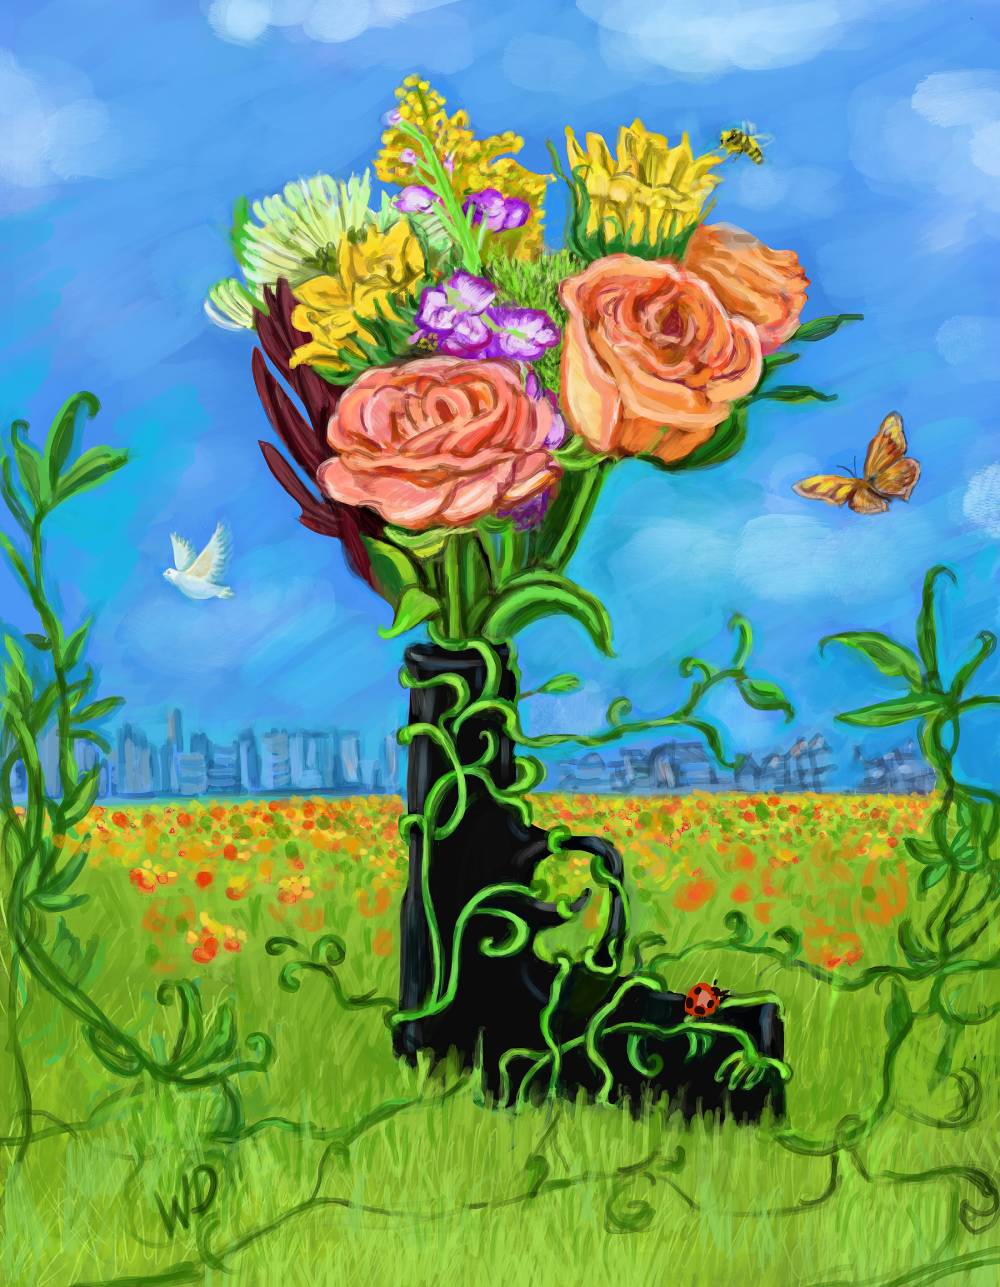 Gun-Flowers Dream, 2021, Painted on iPad using Procreate and Acrylic paint tool settings, 18″x24″